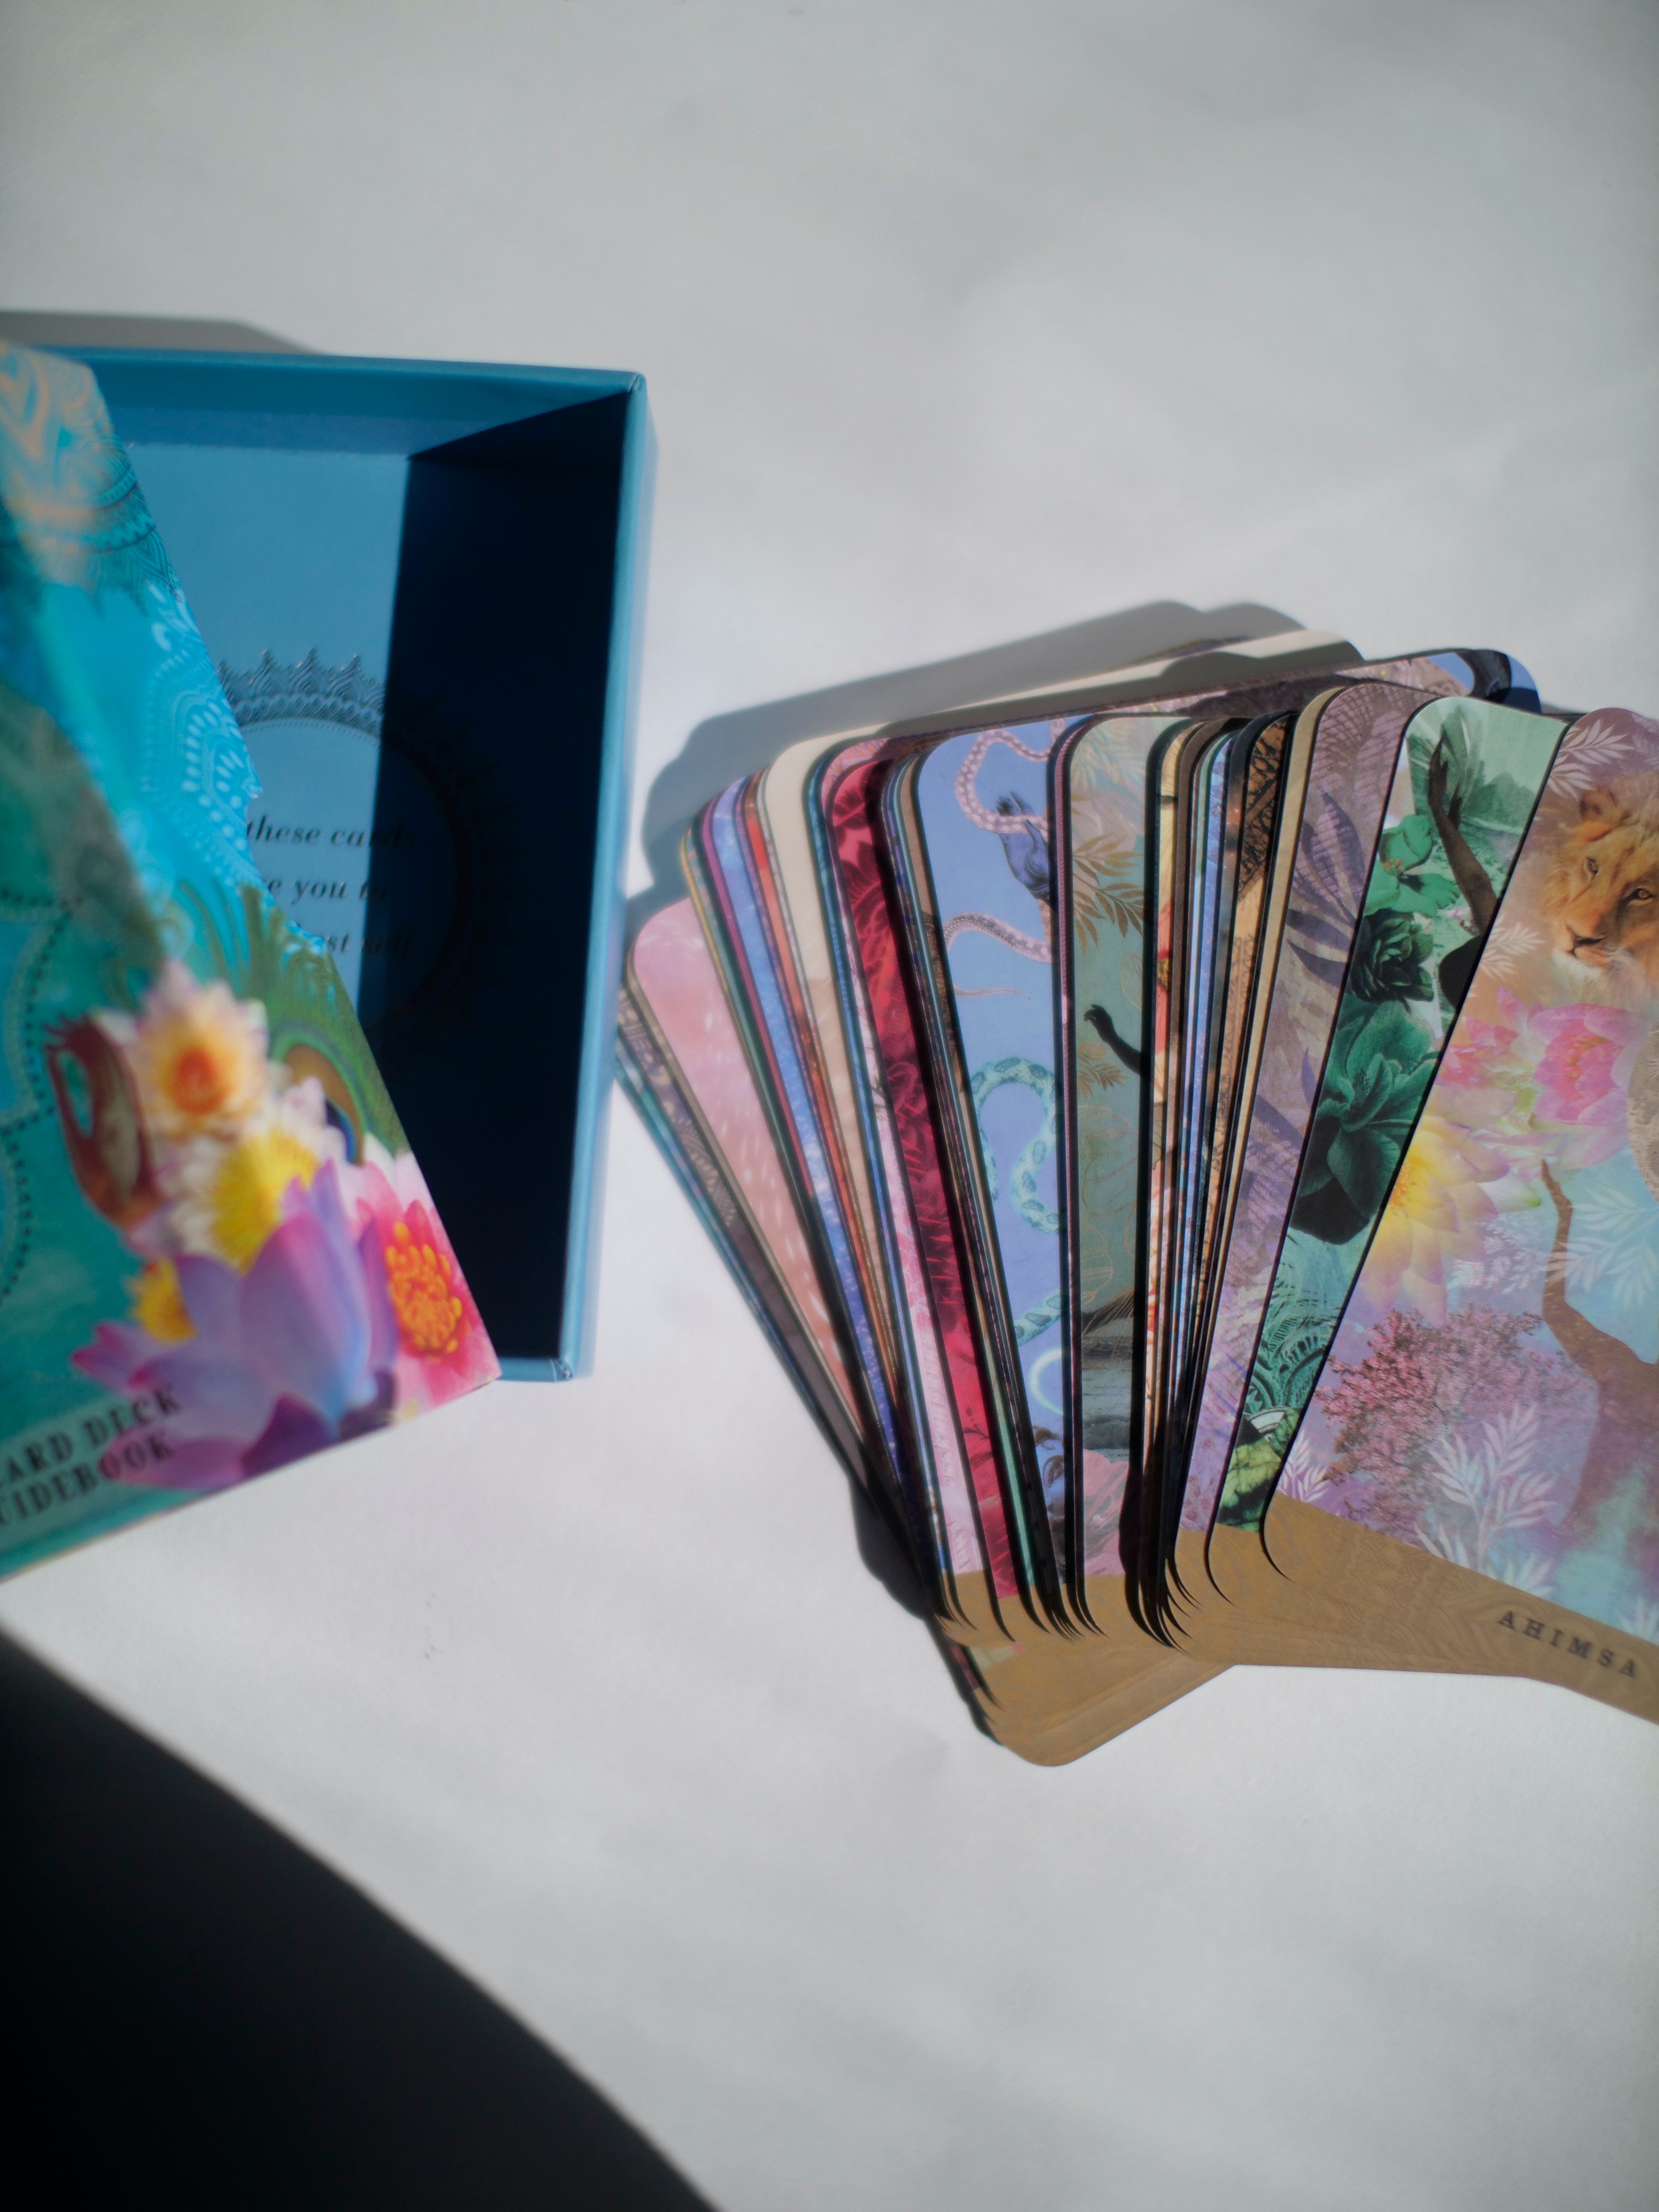 ORACLE CARD & GUIDE BOOK【A YOGIC PATH | 英語版】